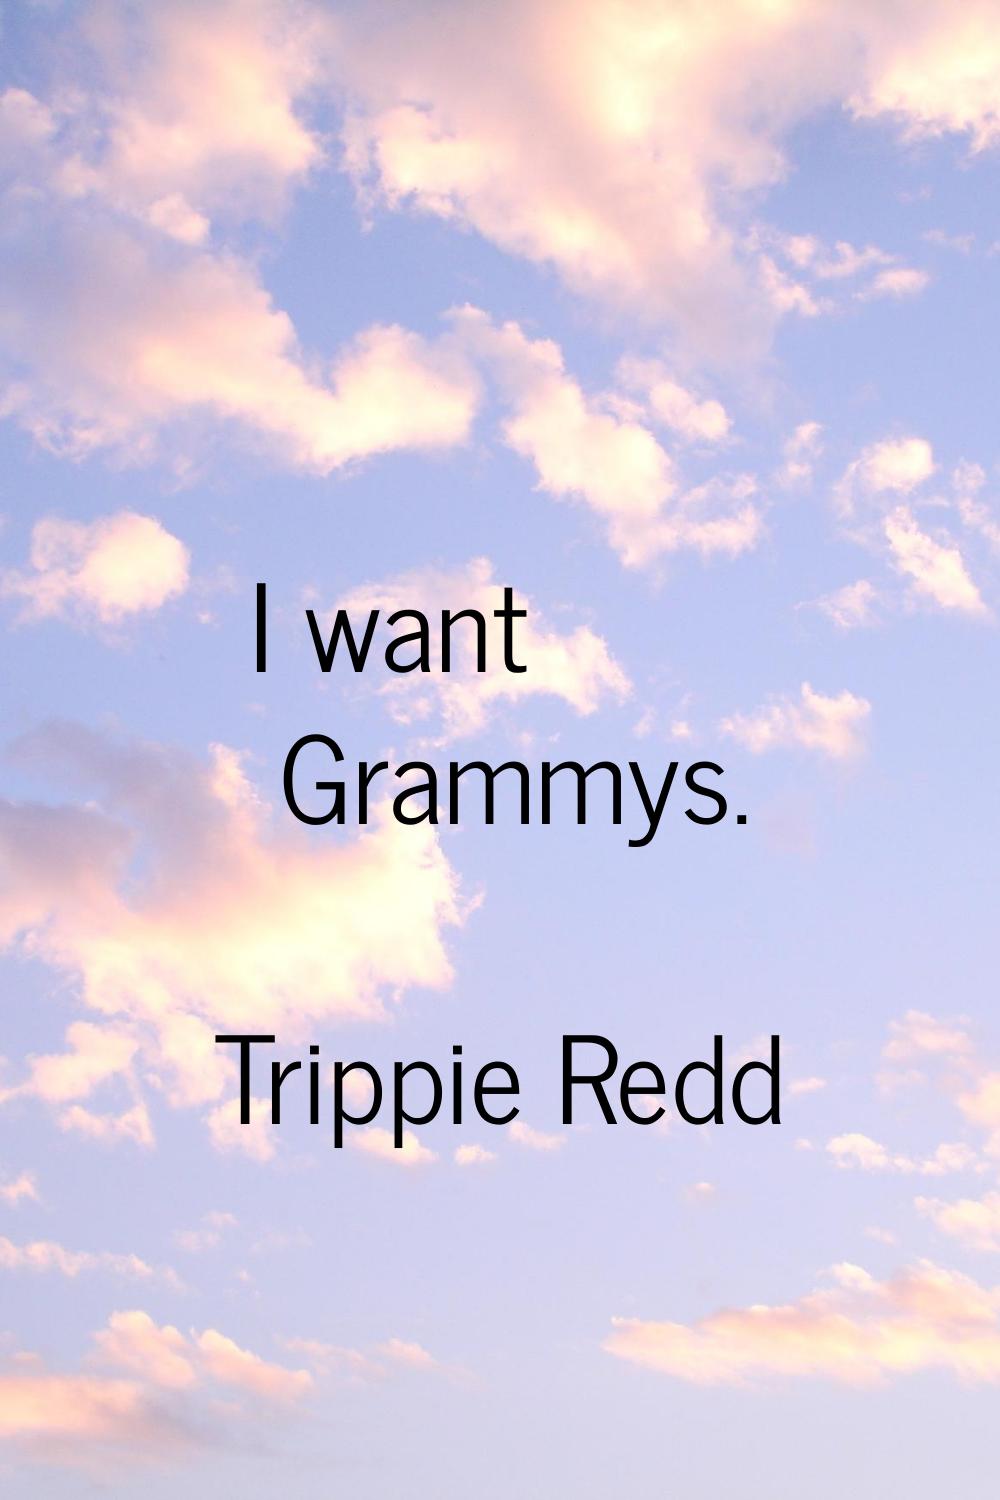 I want Grammys.